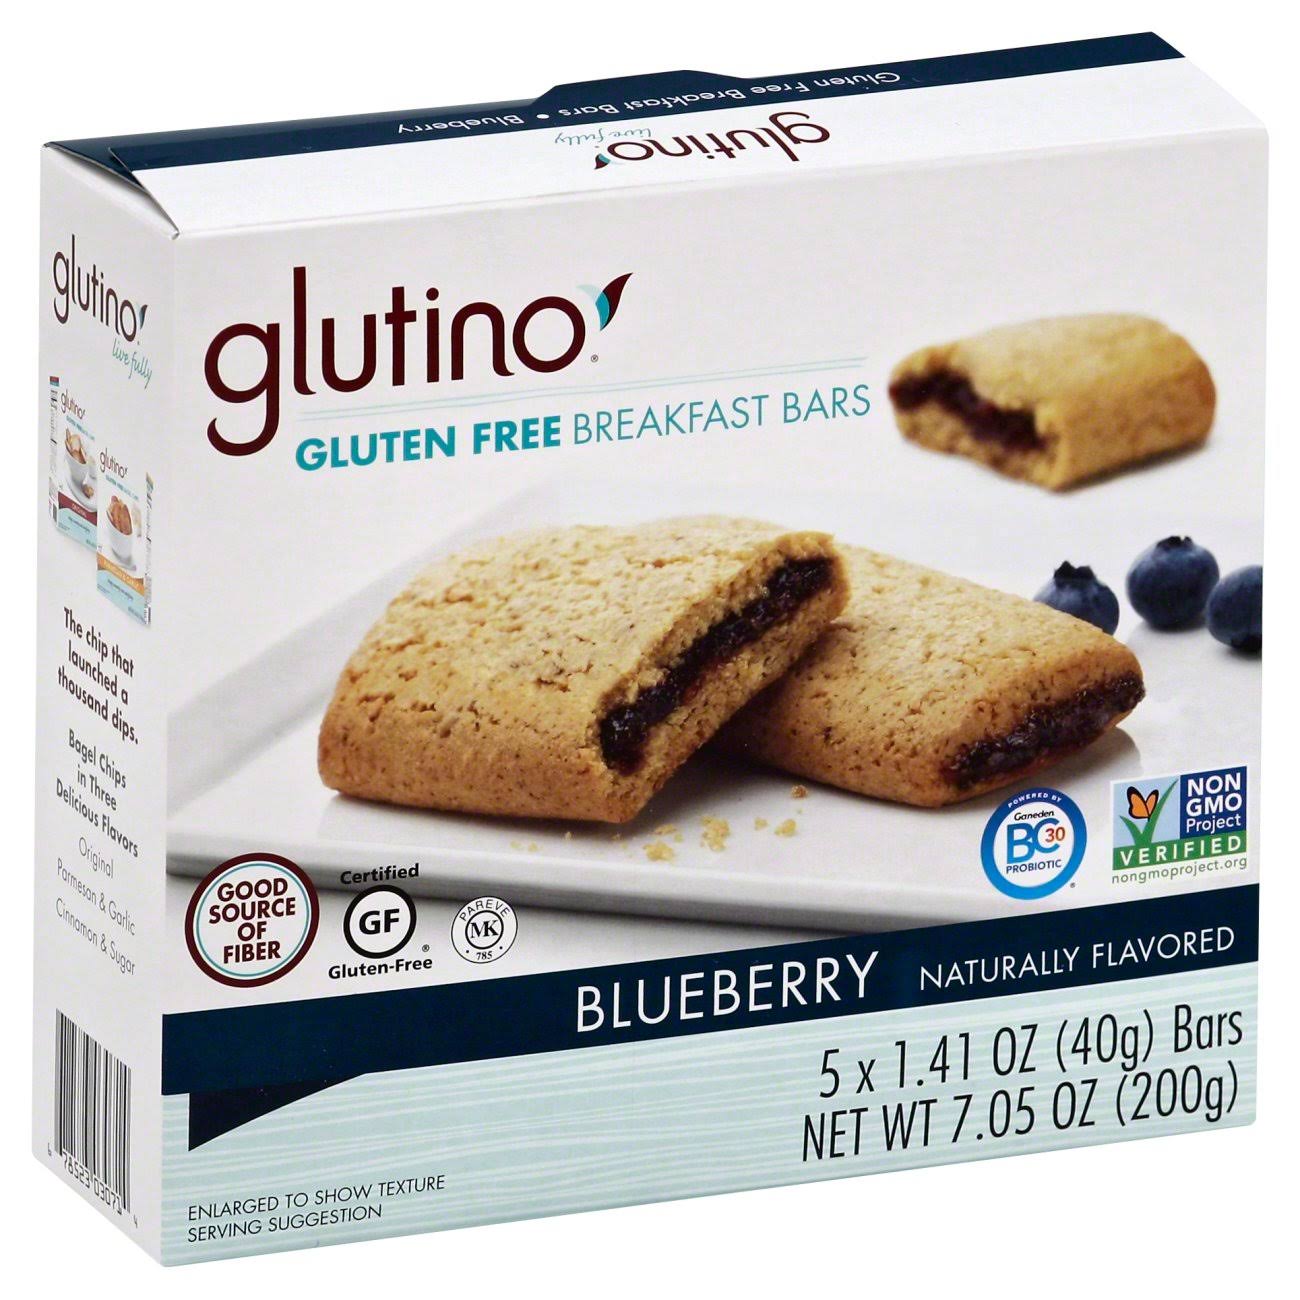 Glutino Gluten Free Breakfast Bars - Blueberry, 5 Count